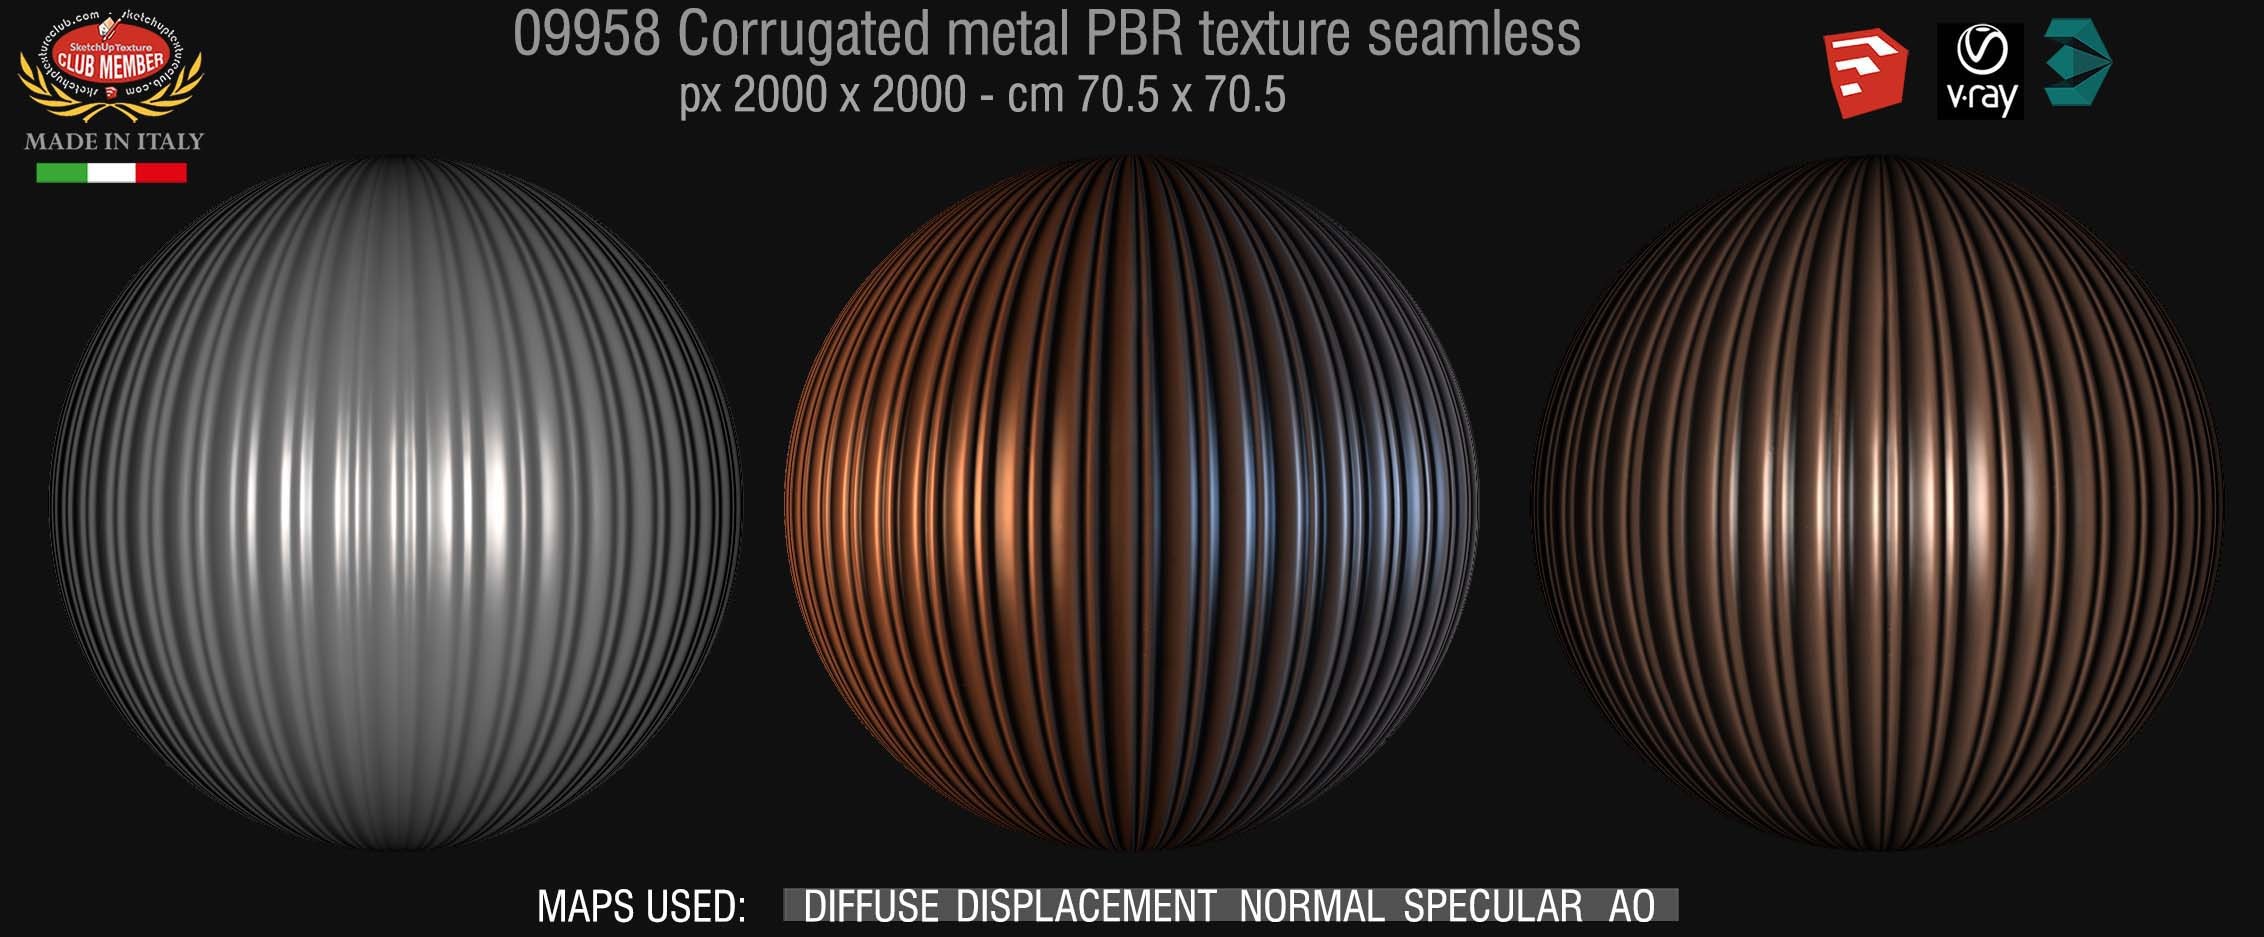 09958 Corrugated metal PBR texture seamless DEMO